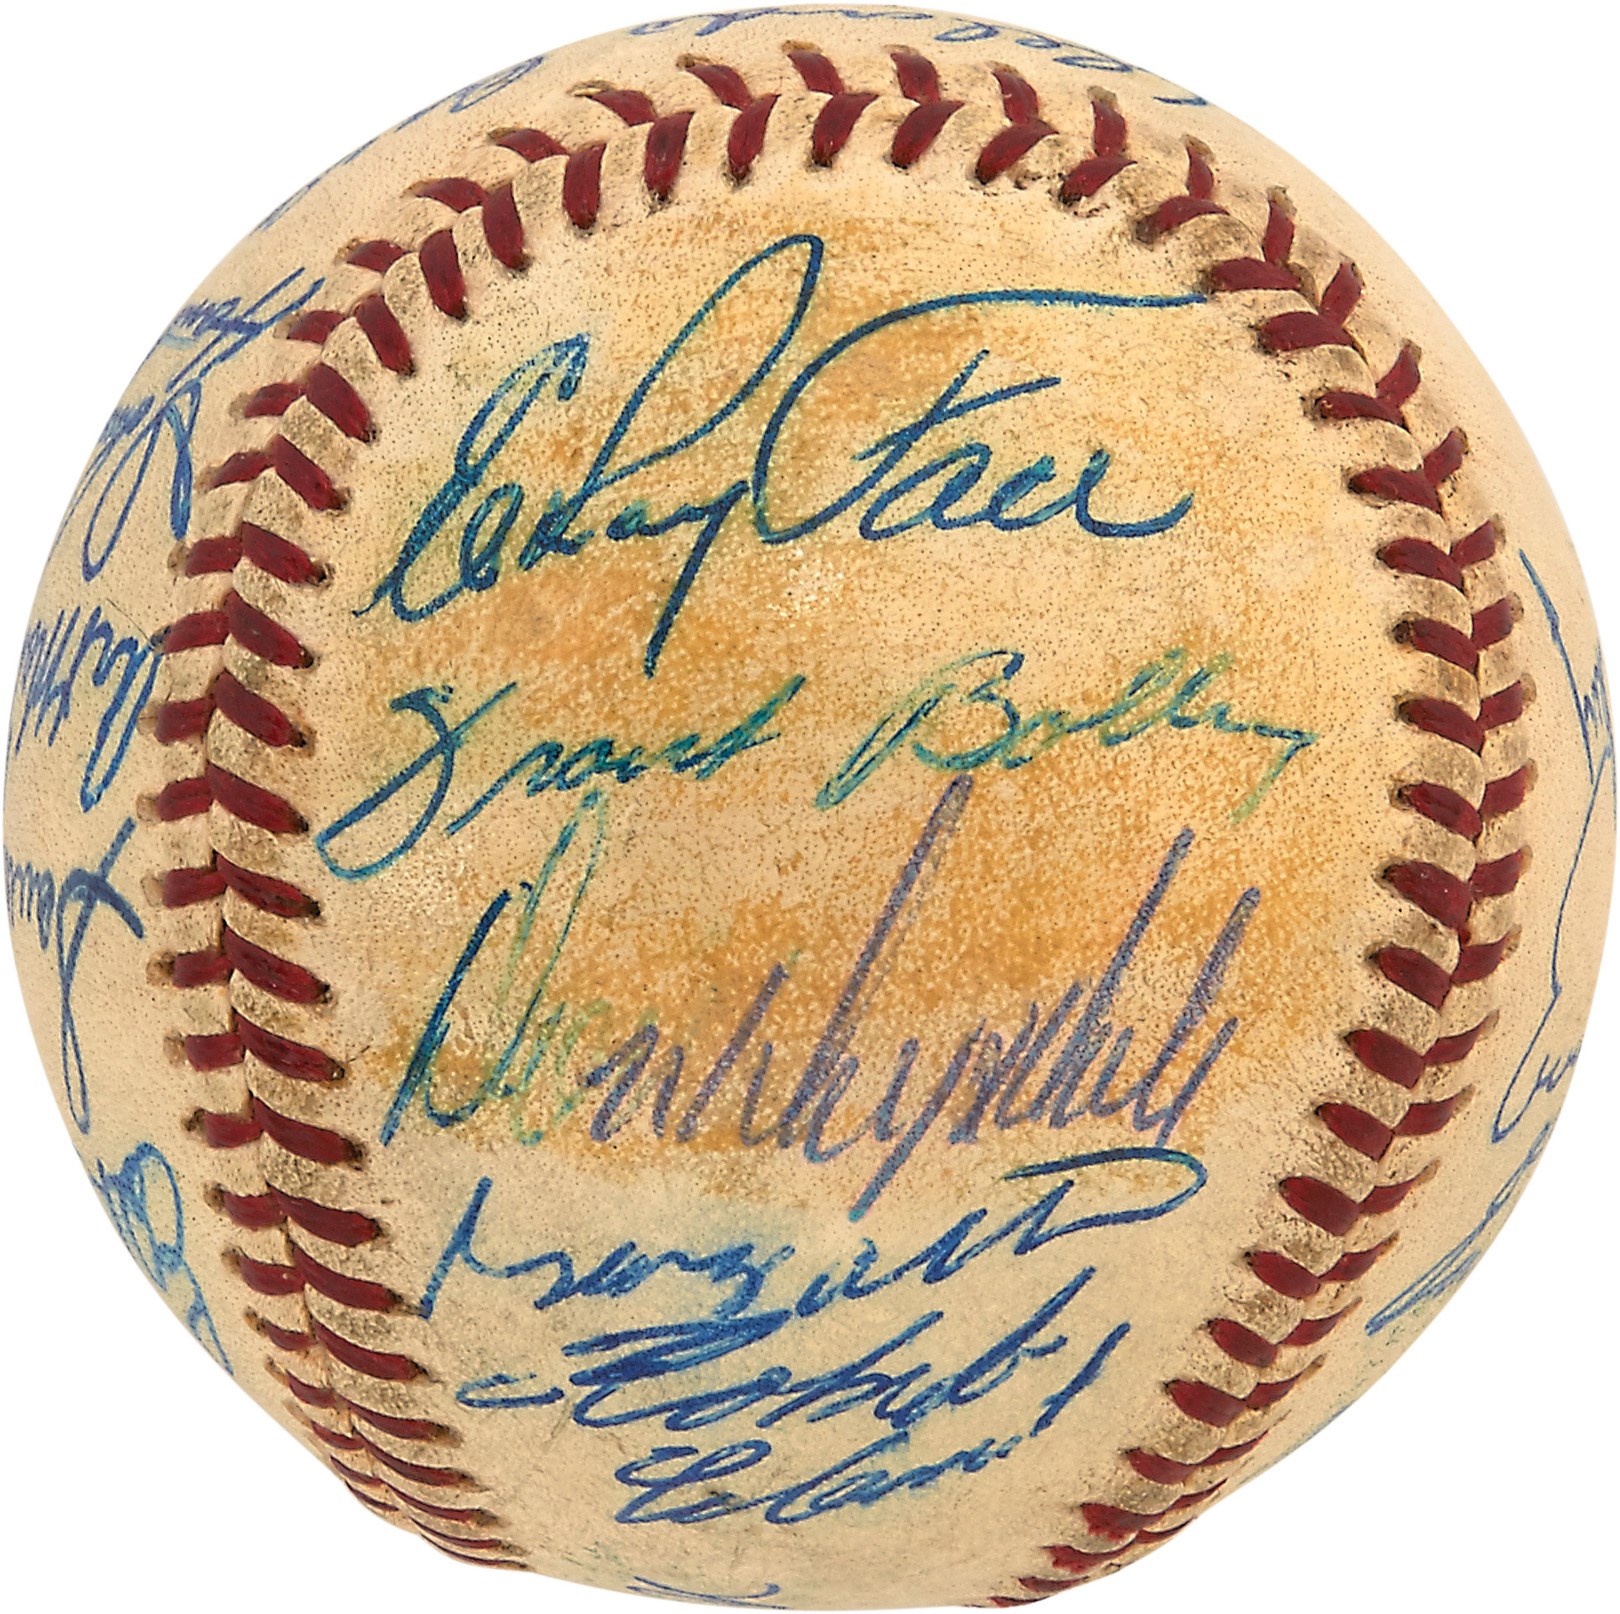 - 1961 National League All-Star Team-Signed Baseball w/ Clemente (PSA)